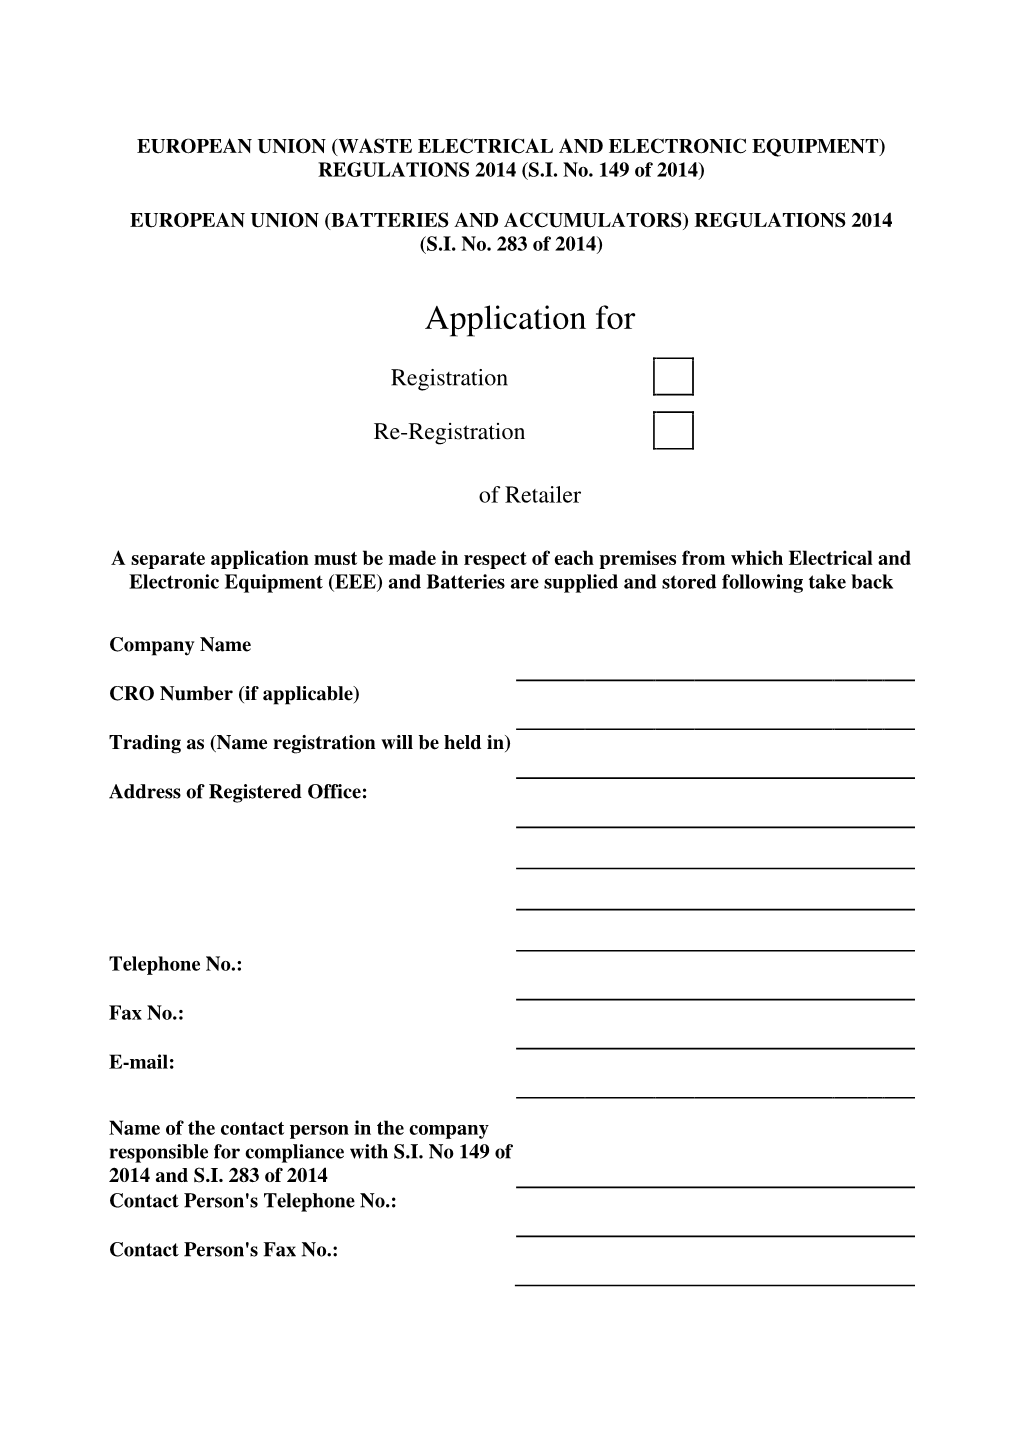 WEEE Retailer Registration Application Form